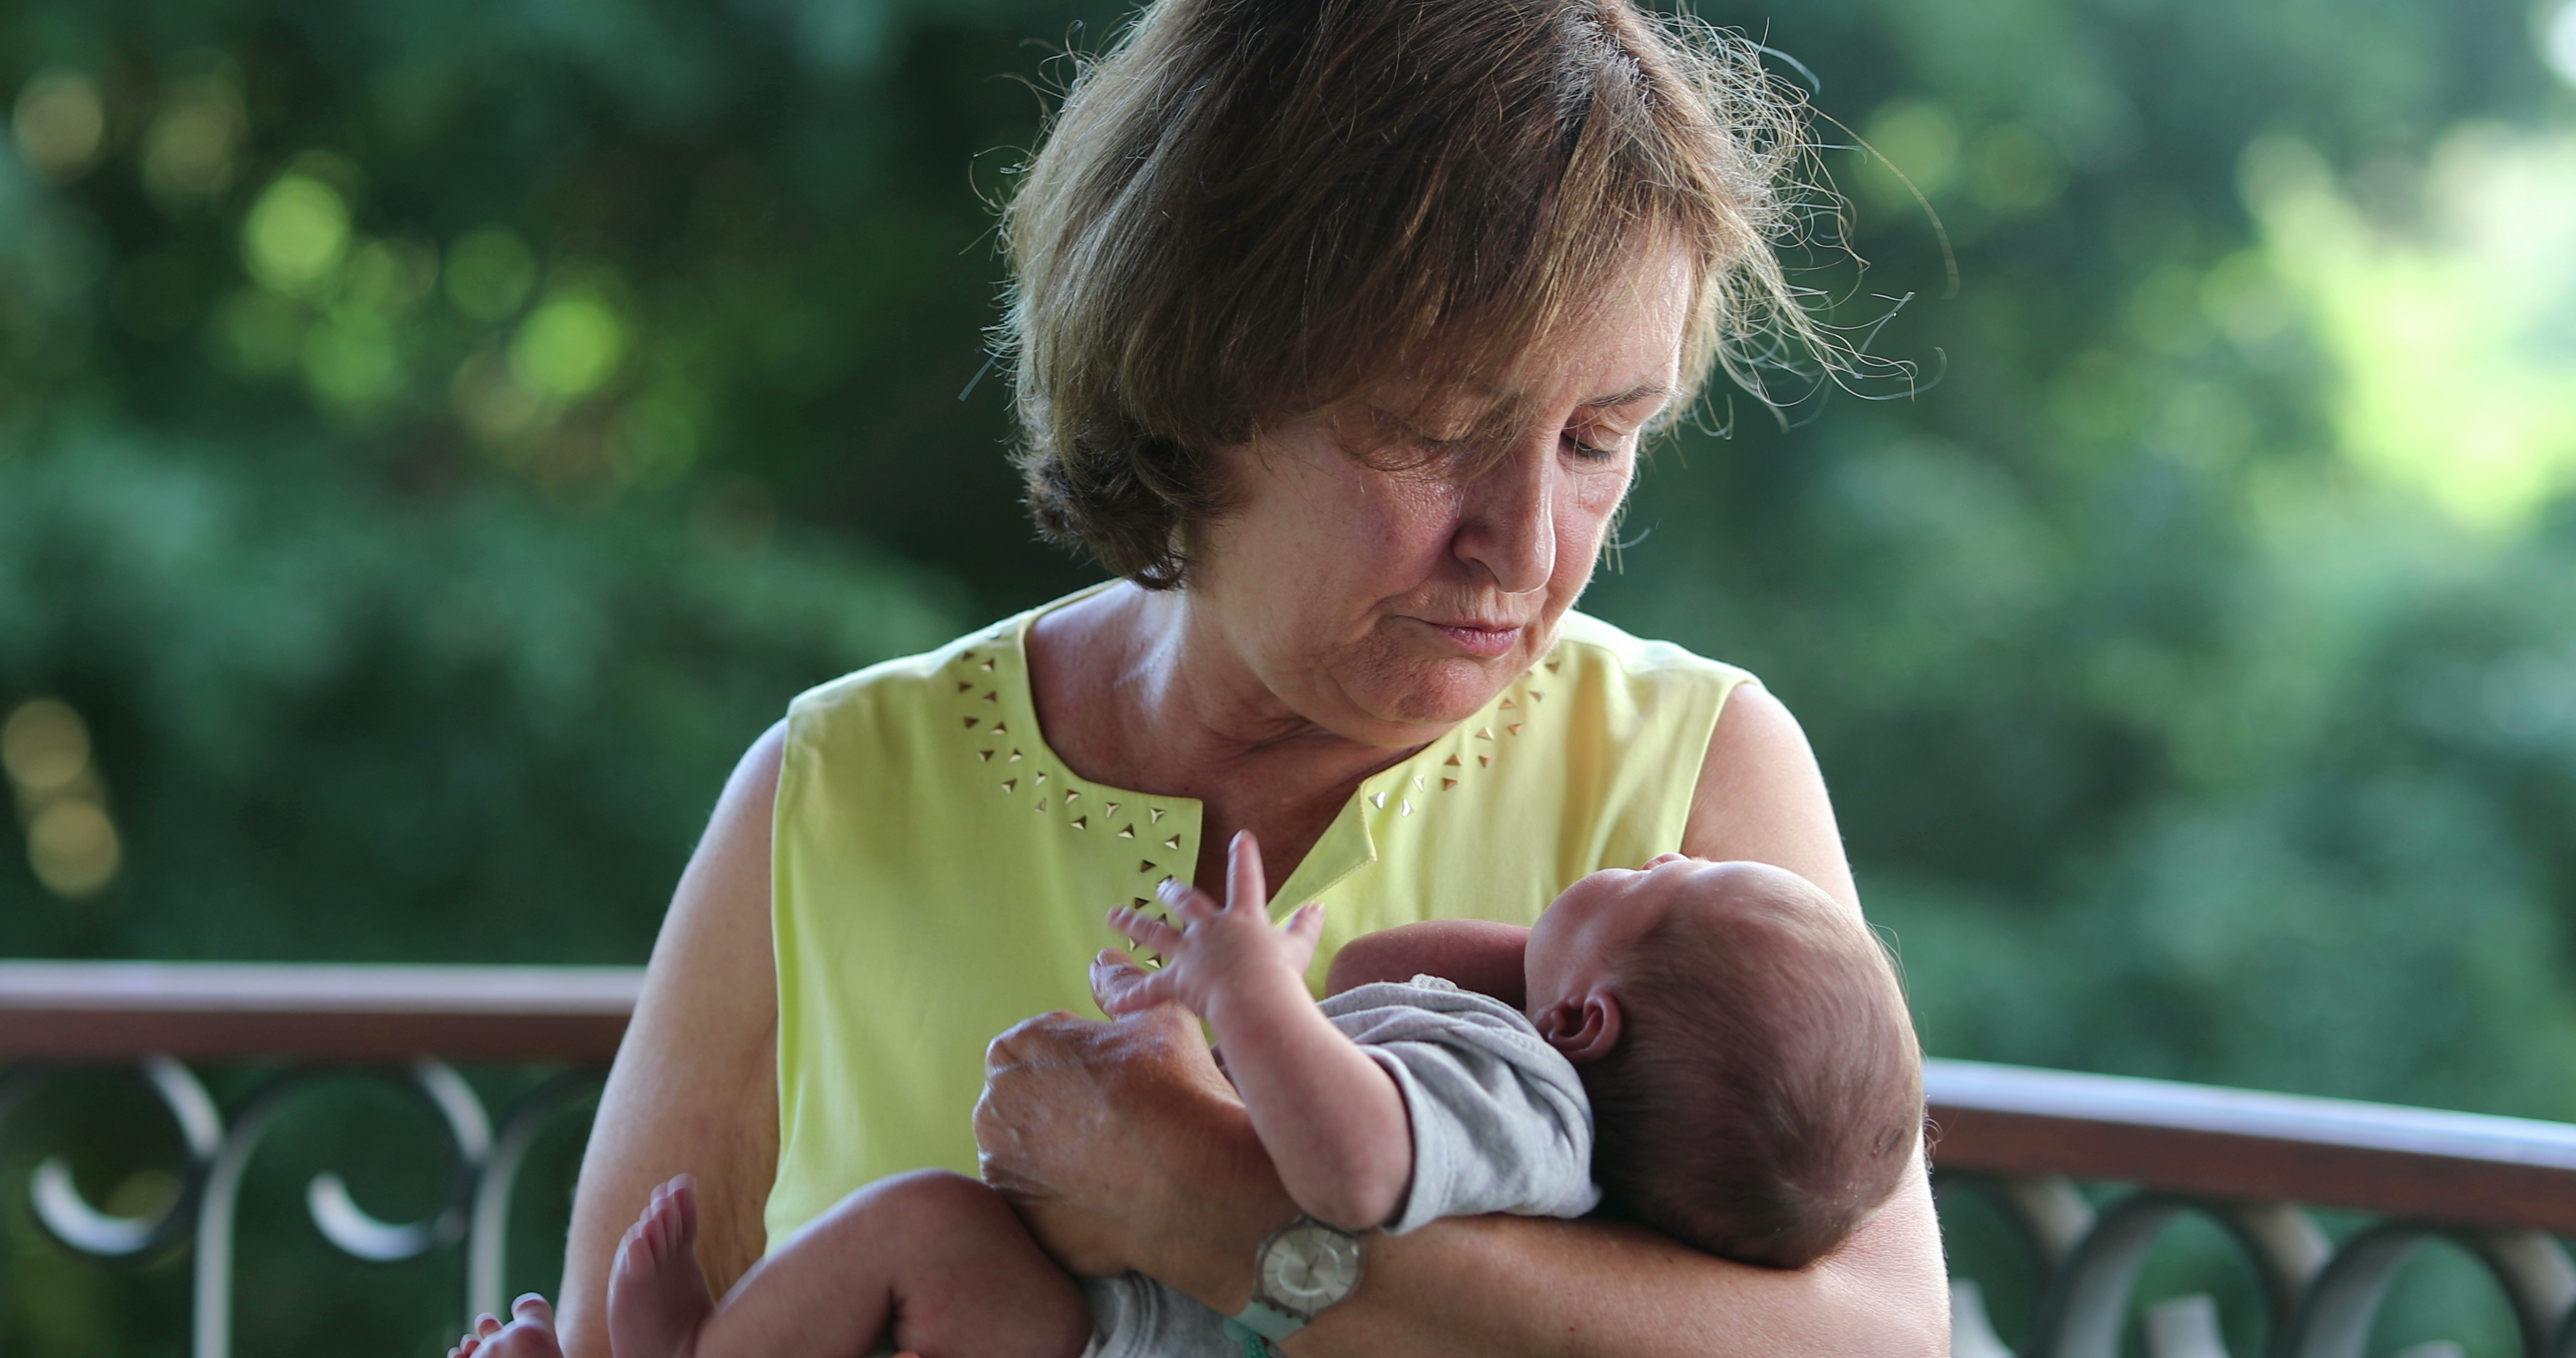 An elderly woman holding a baby. | Source: Shutterstock